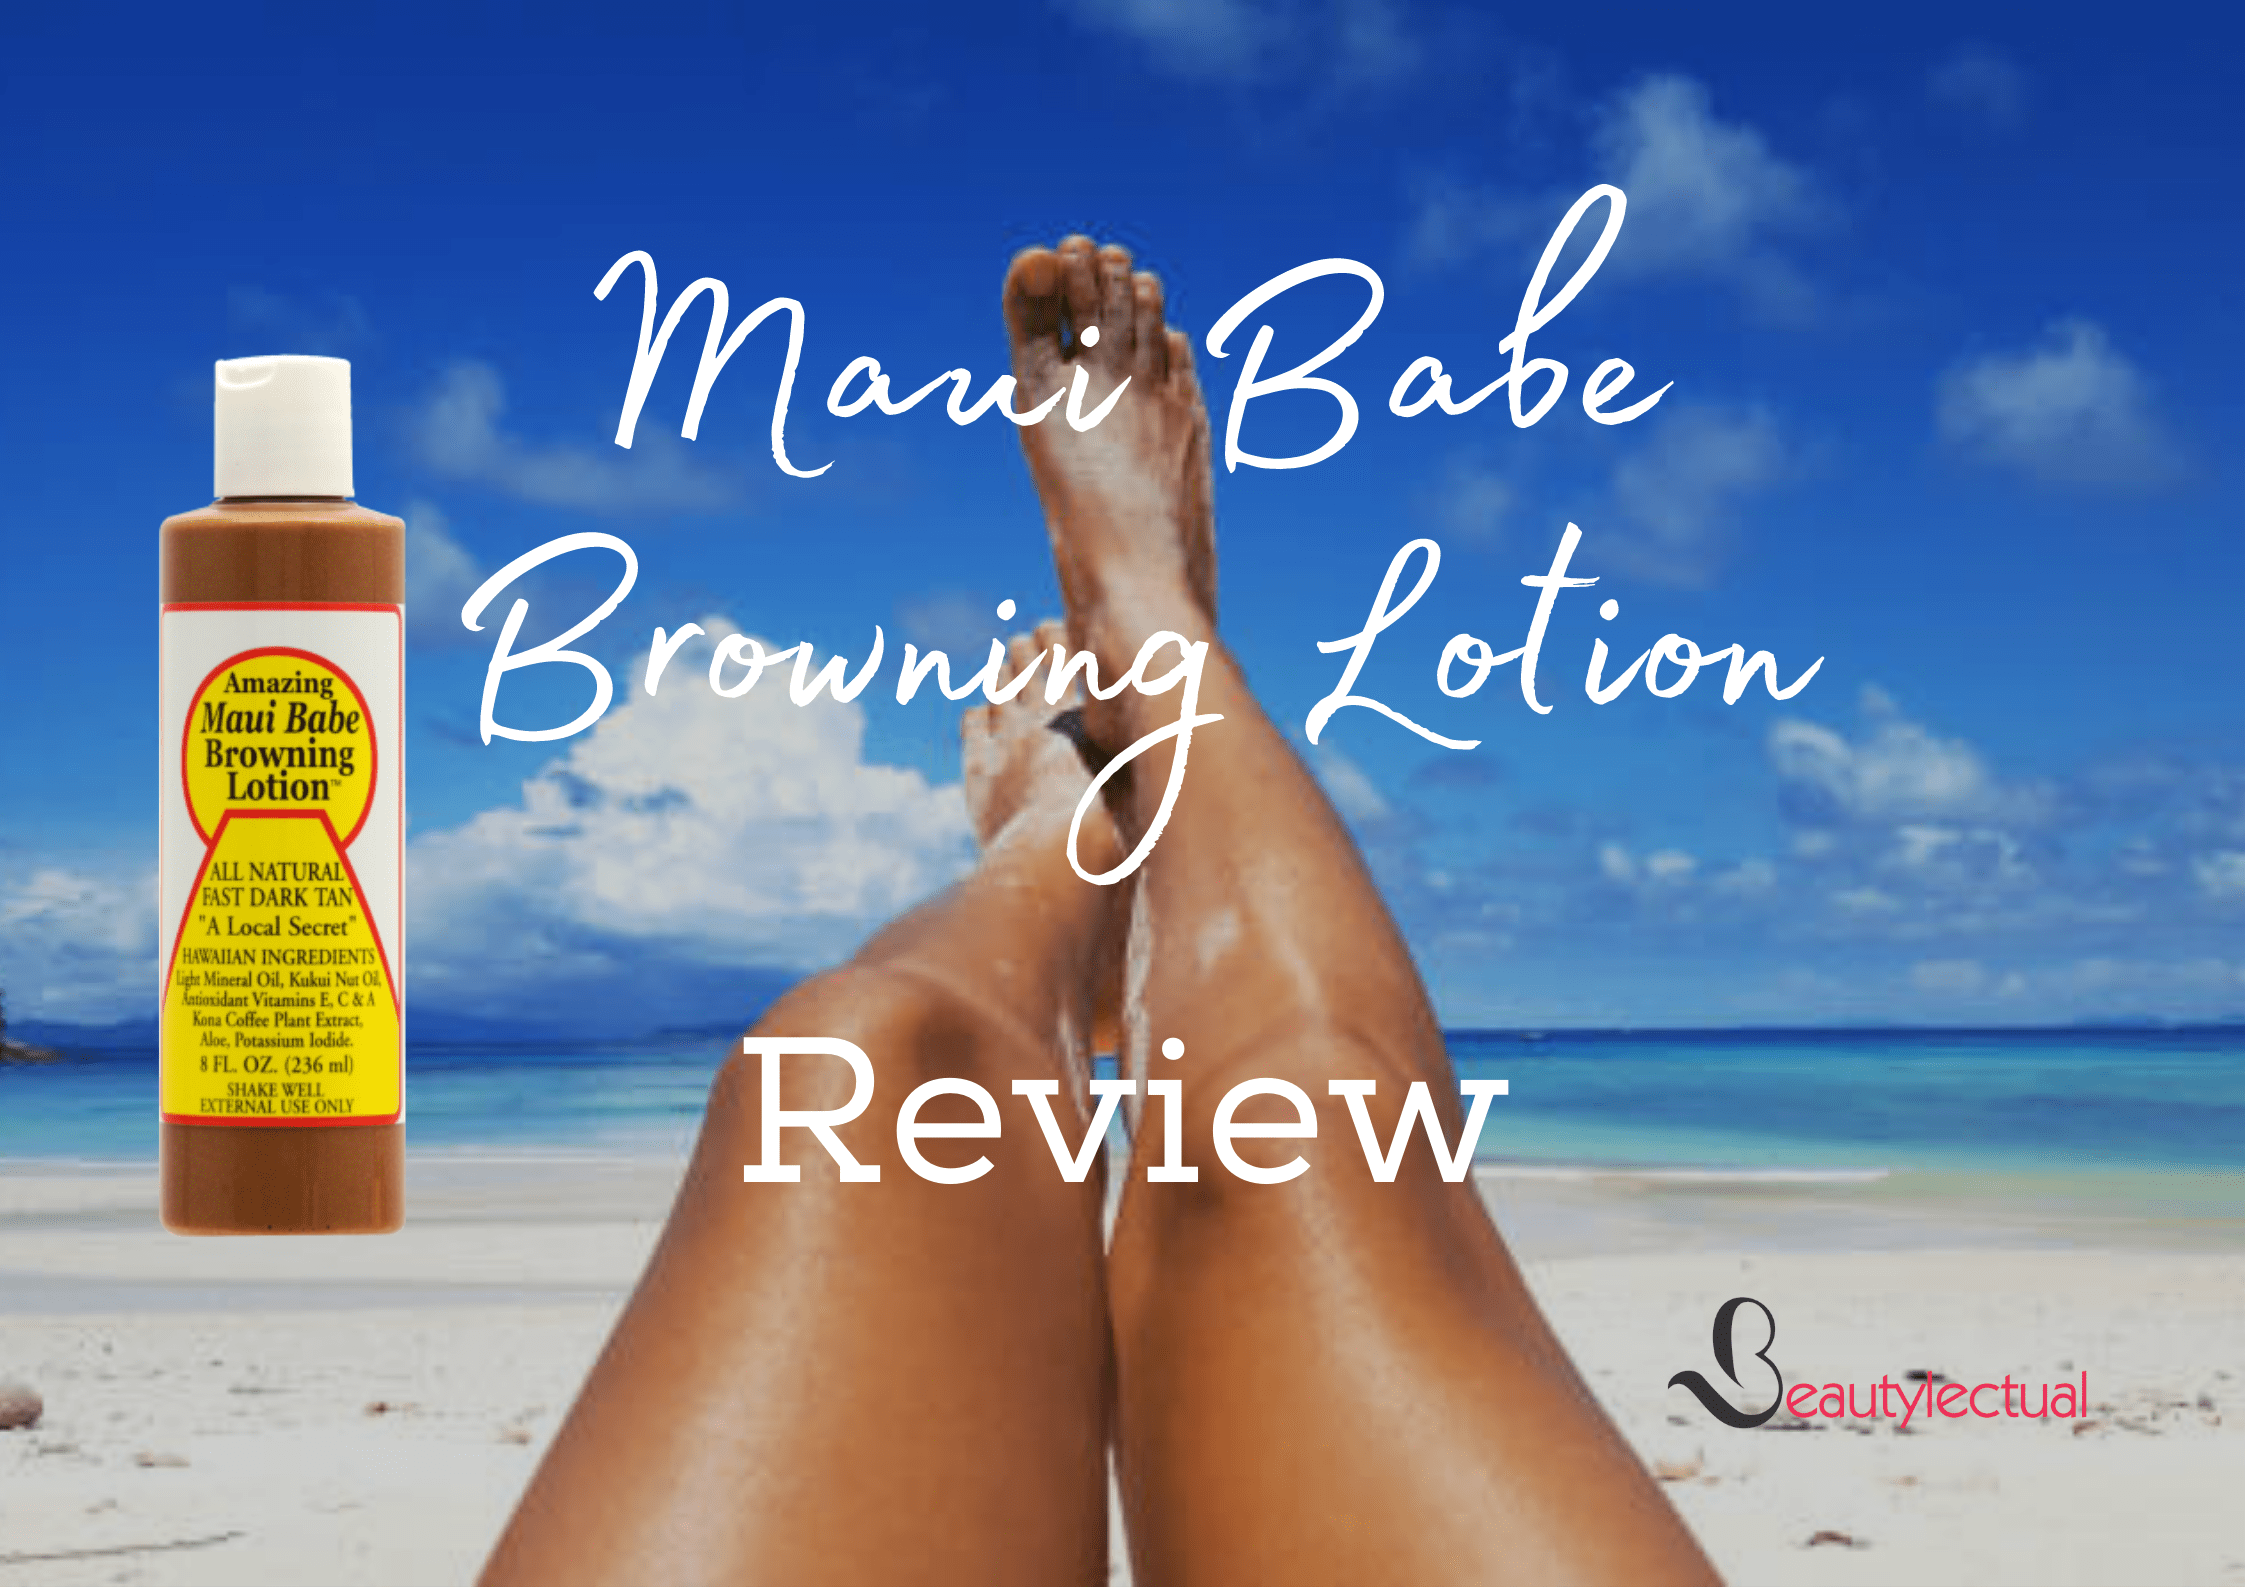 Maui-Babe-Browning-Lotion-Reviews